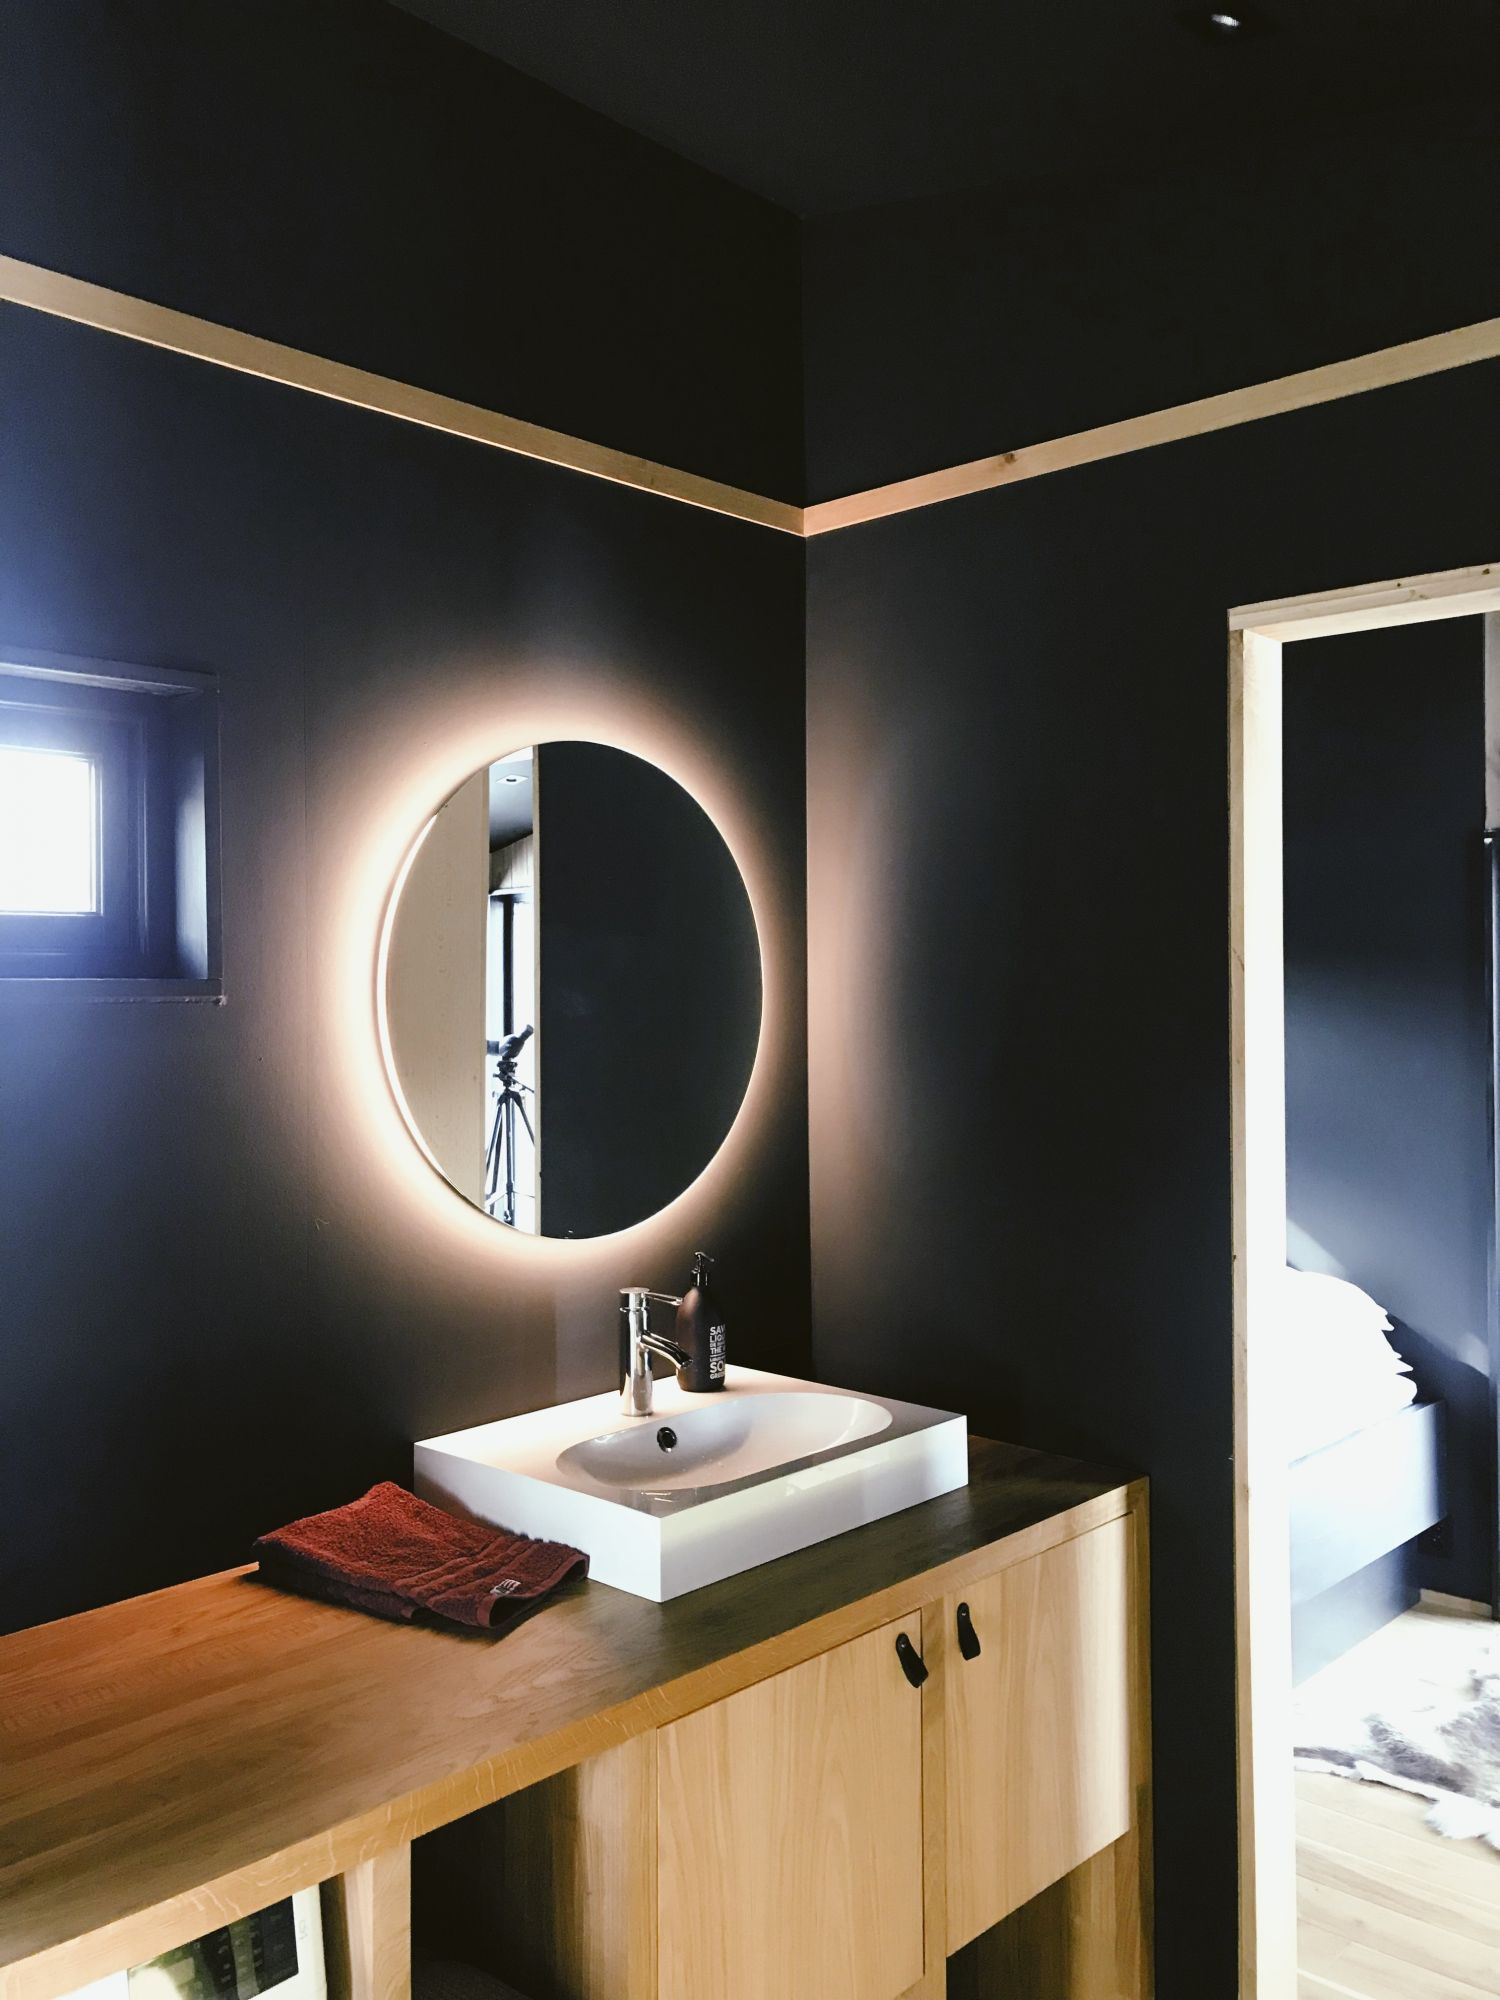 LED Bathroom Mirror Glowing in the Bathroom 